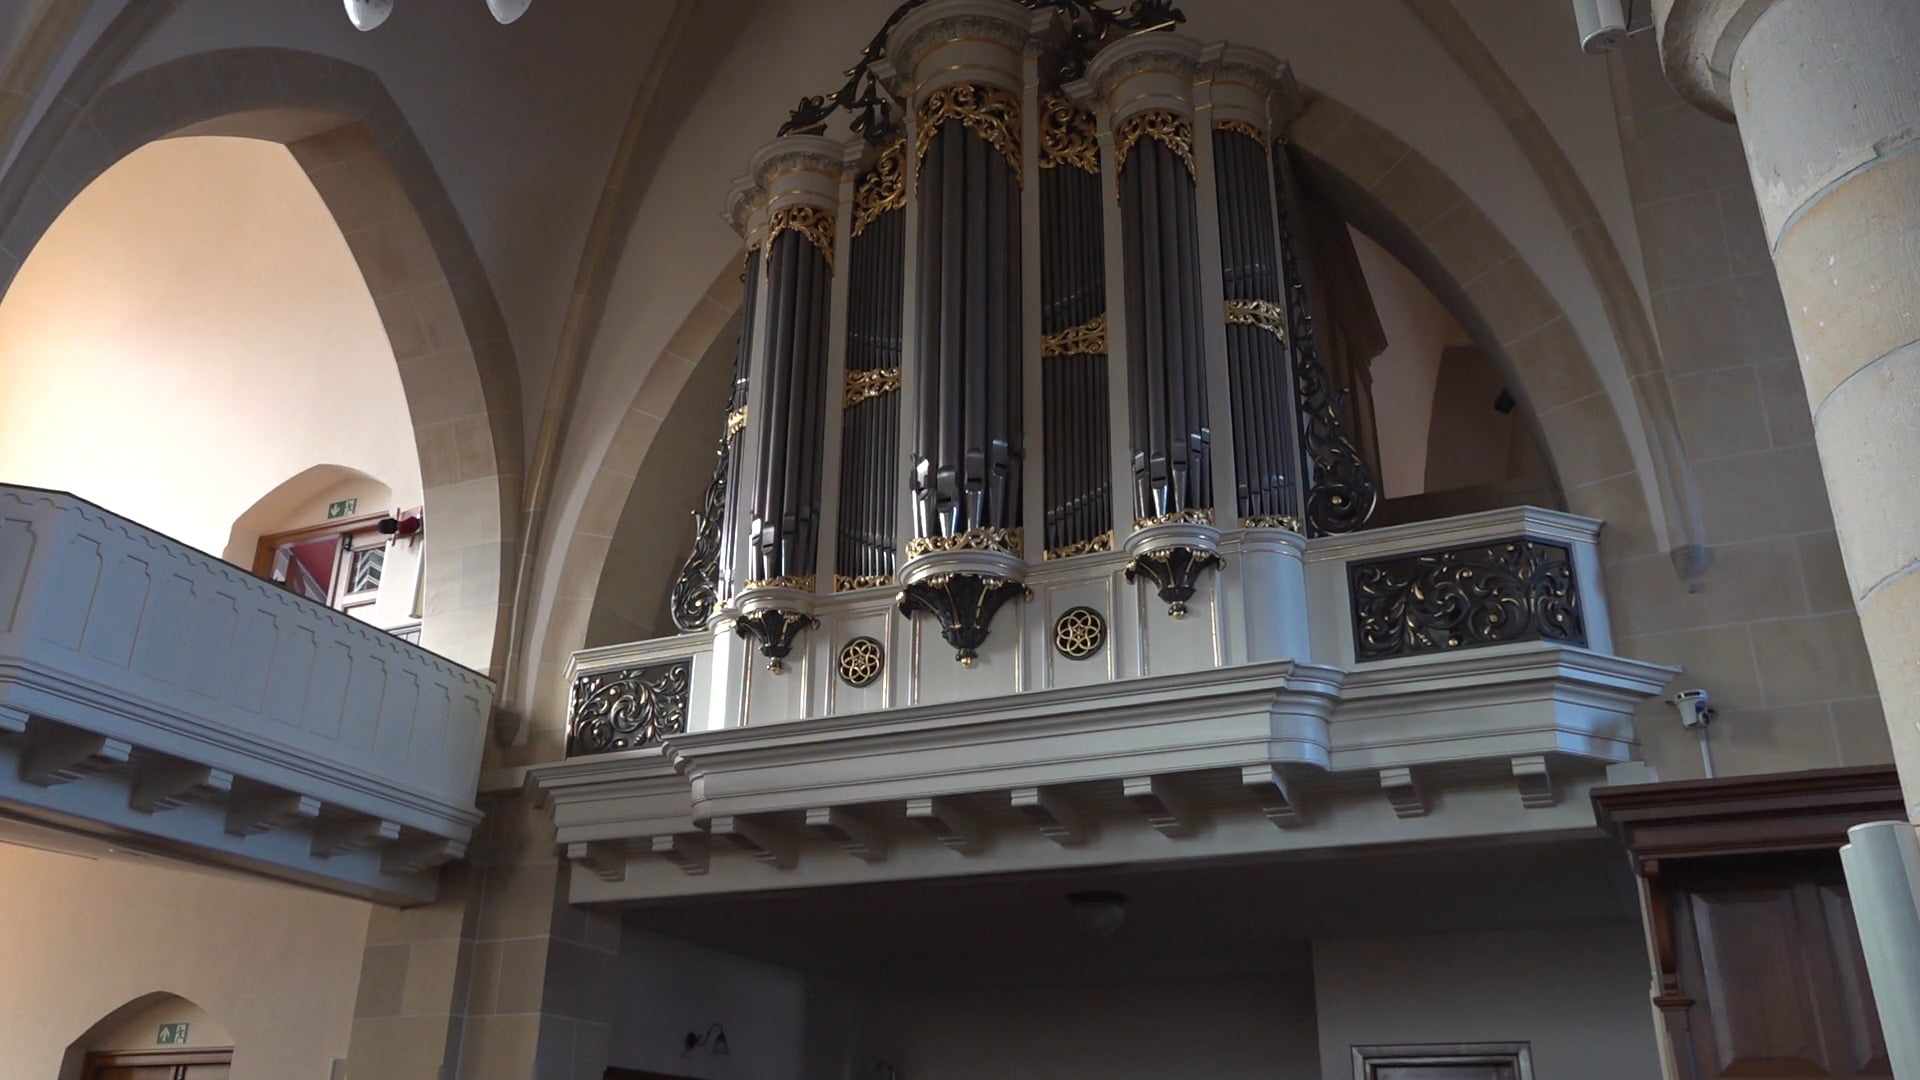 Balcony organ, Church interior, Spiritual sanctuary, Stunning view, 1920x1080 Full HD Desktop